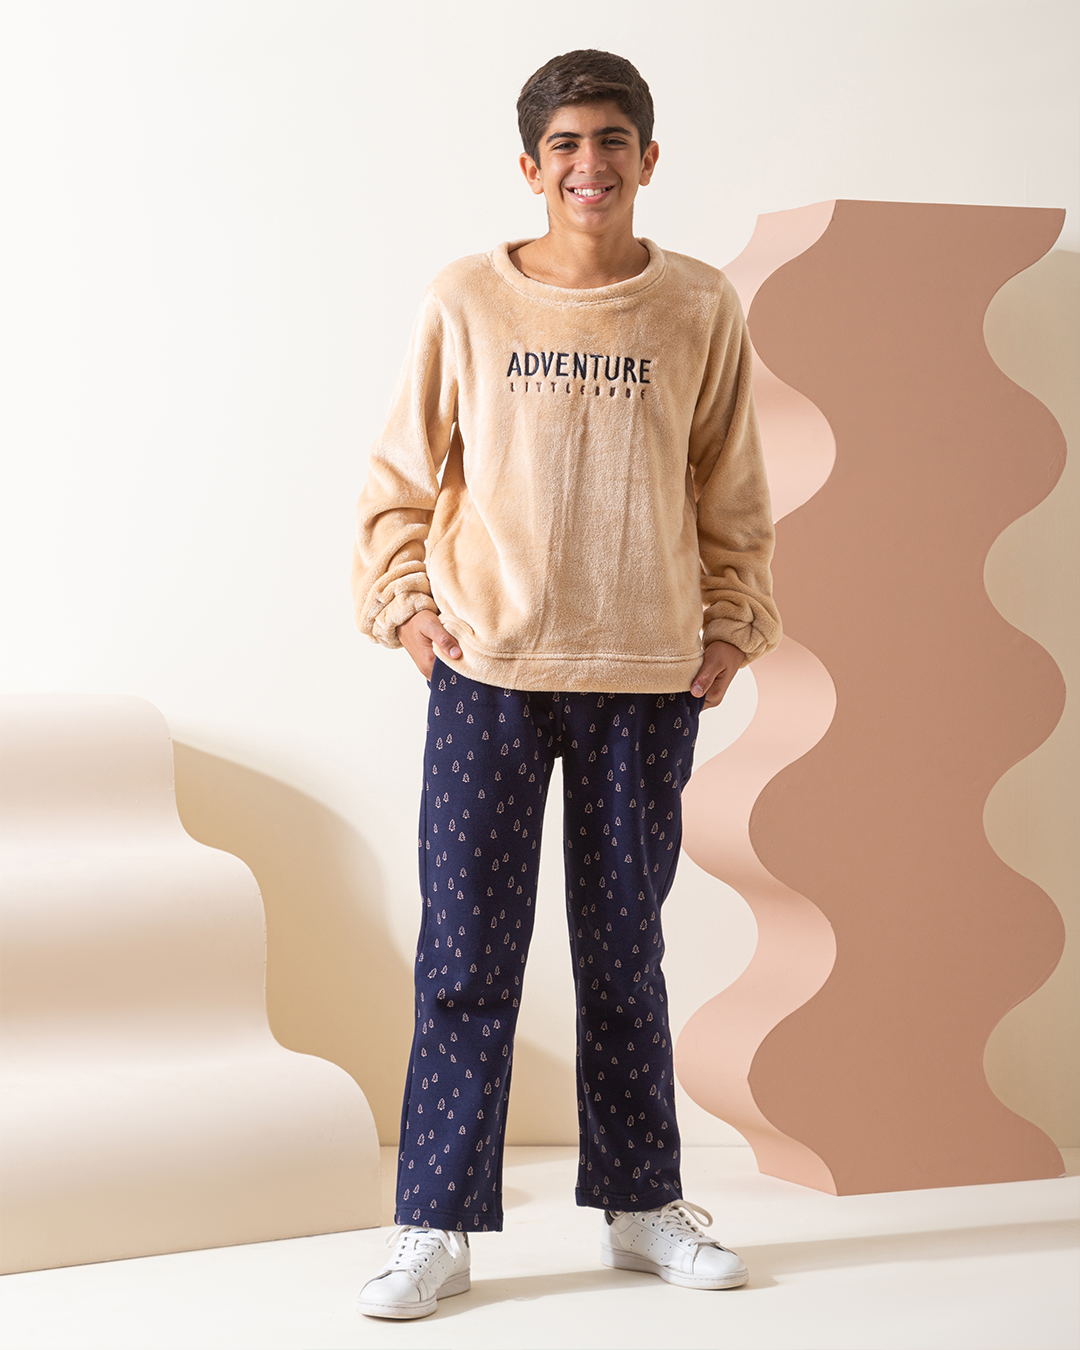 Boys Polar Pajama Embroidered Adventure 